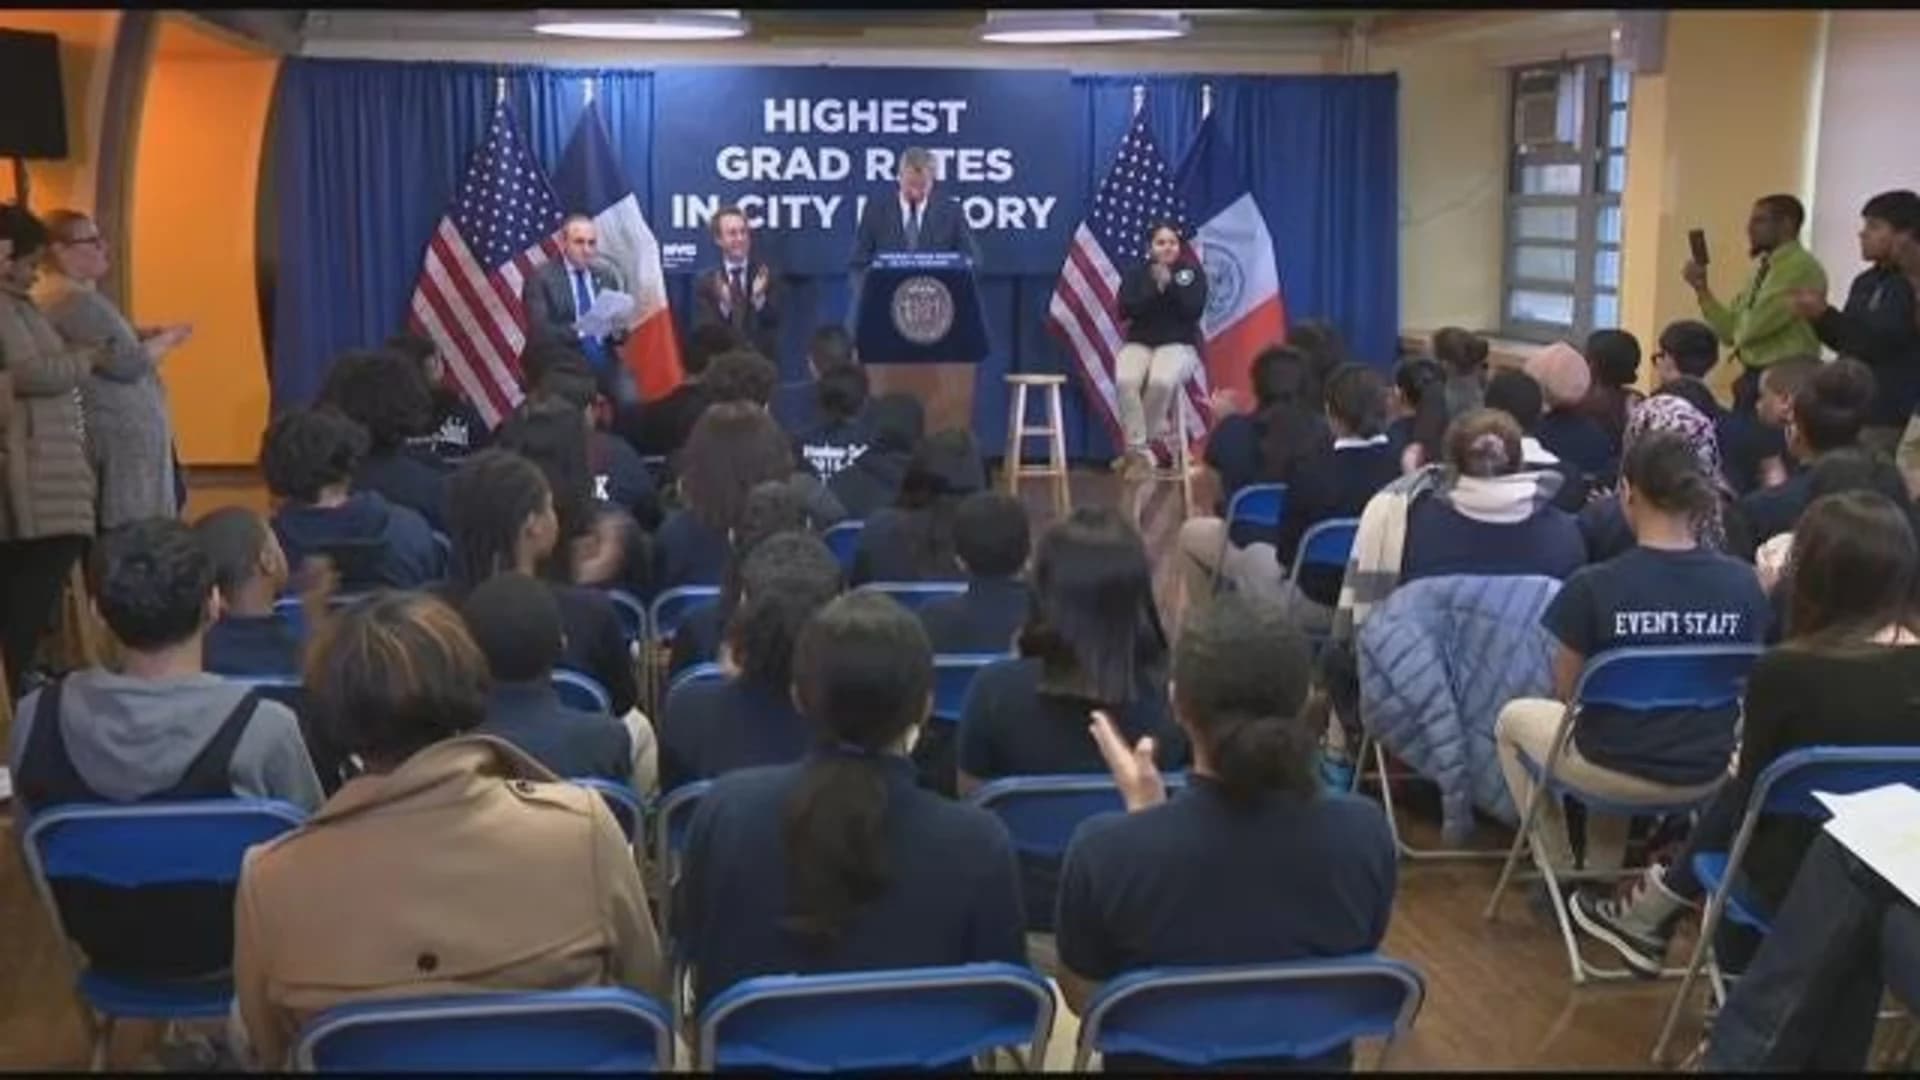 Mayor announces record-high graduation rates across city